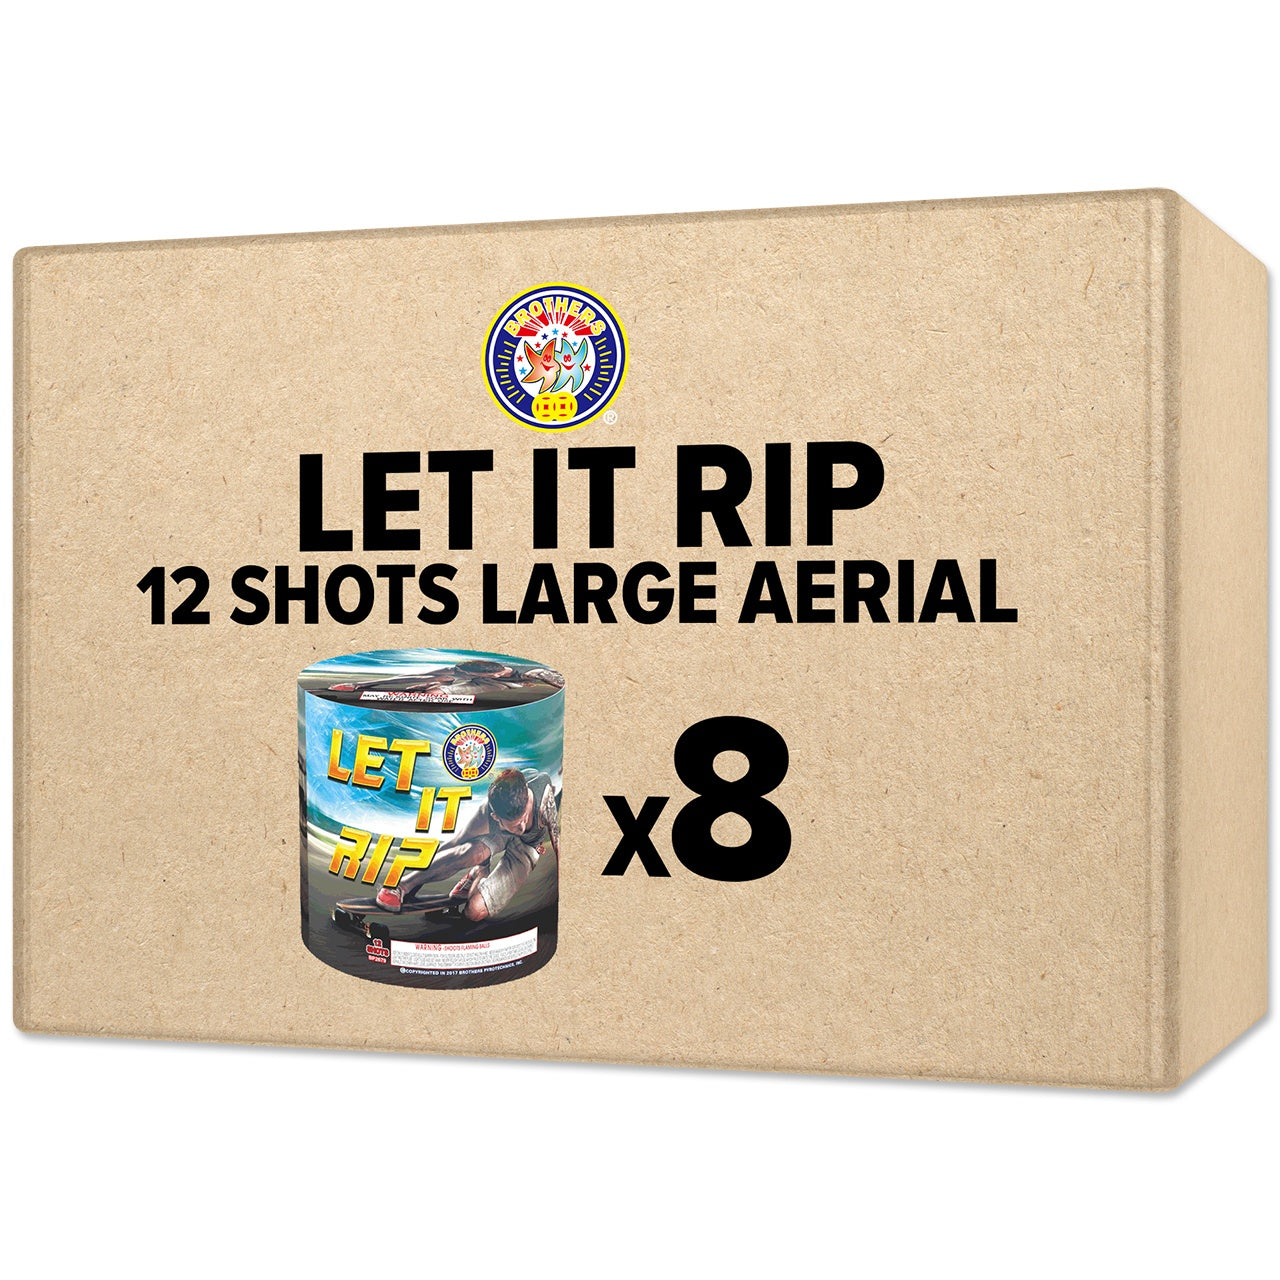 Let It Rip 12 Shots Large Aerial